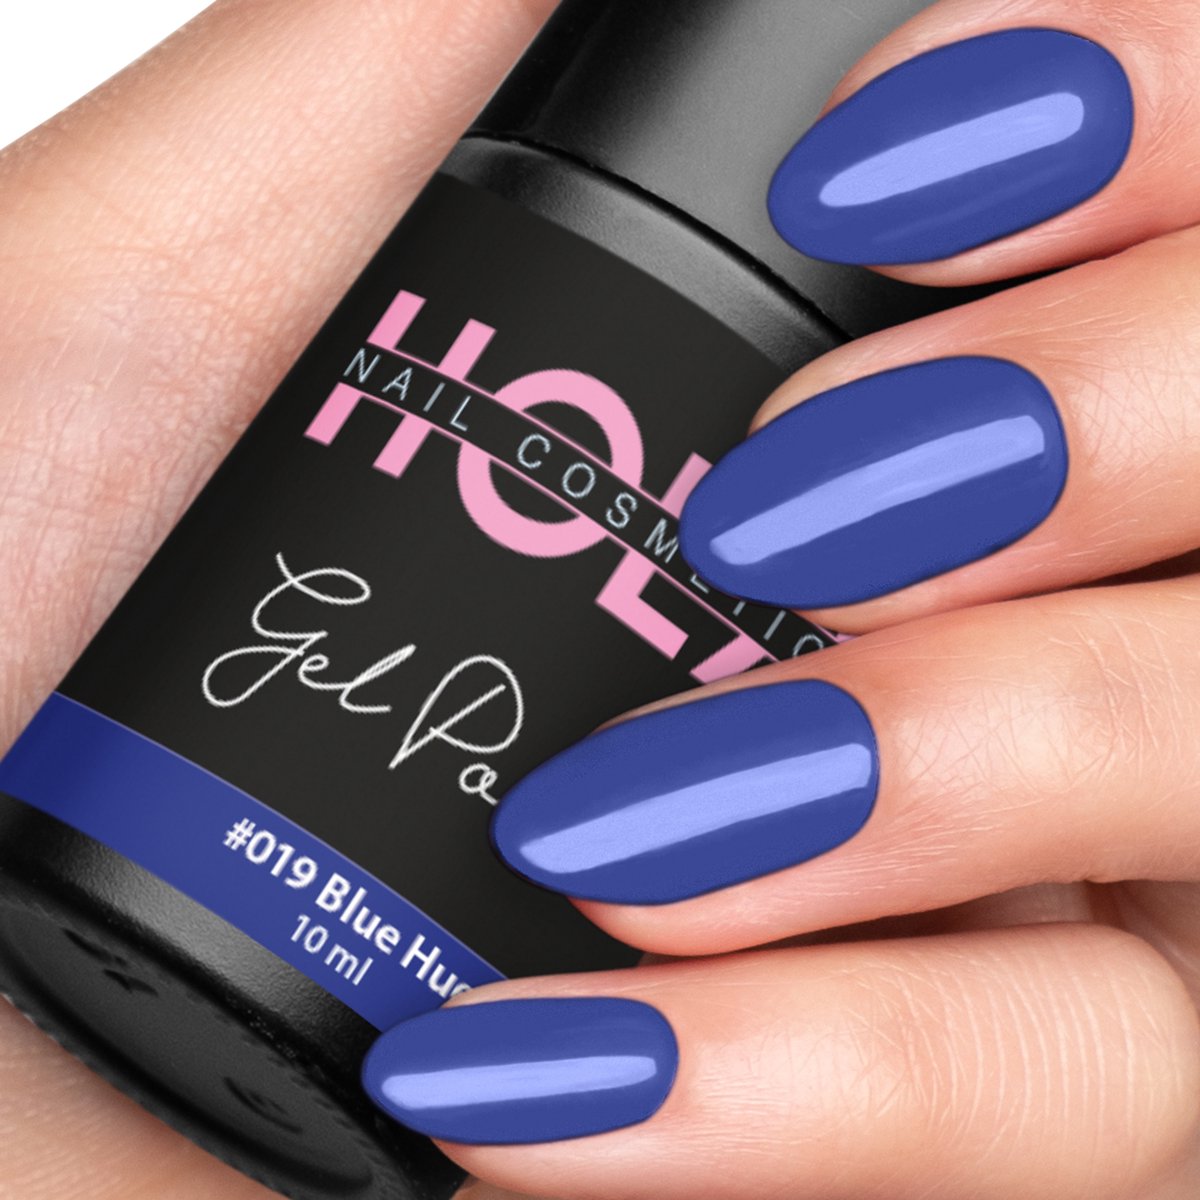 Hola Nail Cosmetica Gelpolish #019 Blue Hue (10ml)